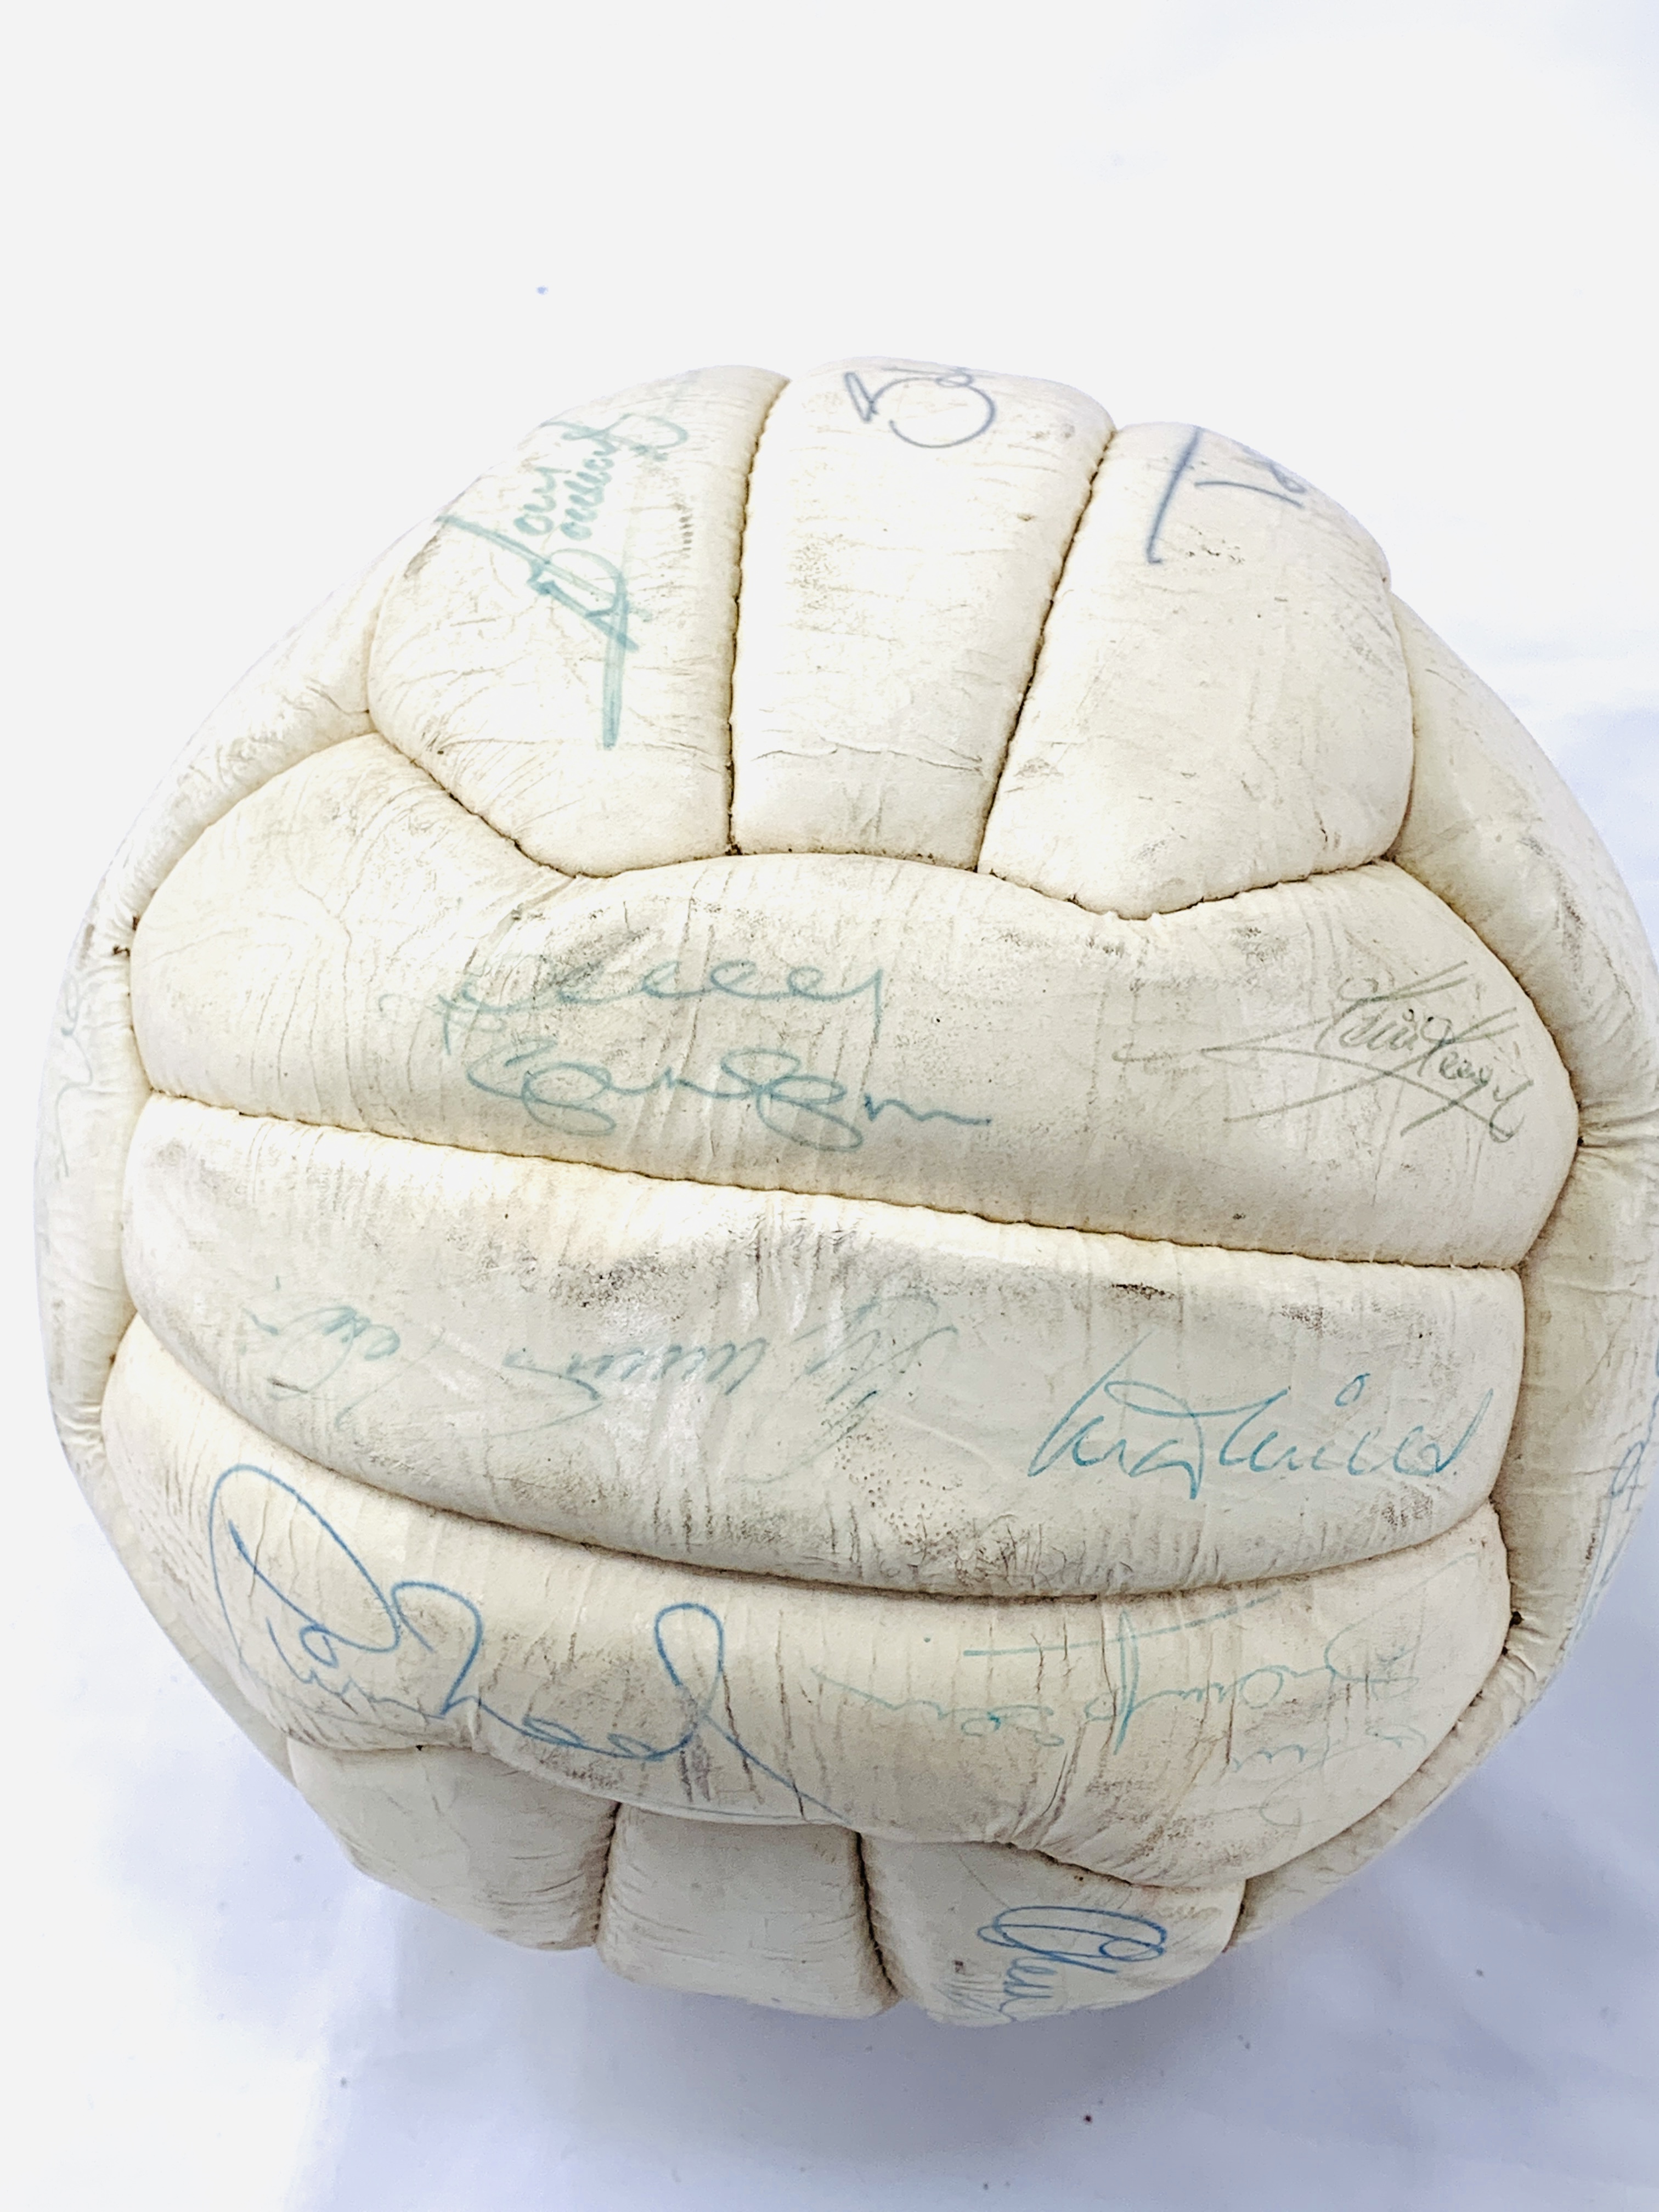 Signed Mitre 5 football with original signatures of 1980's era England football team - Image 4 of 5